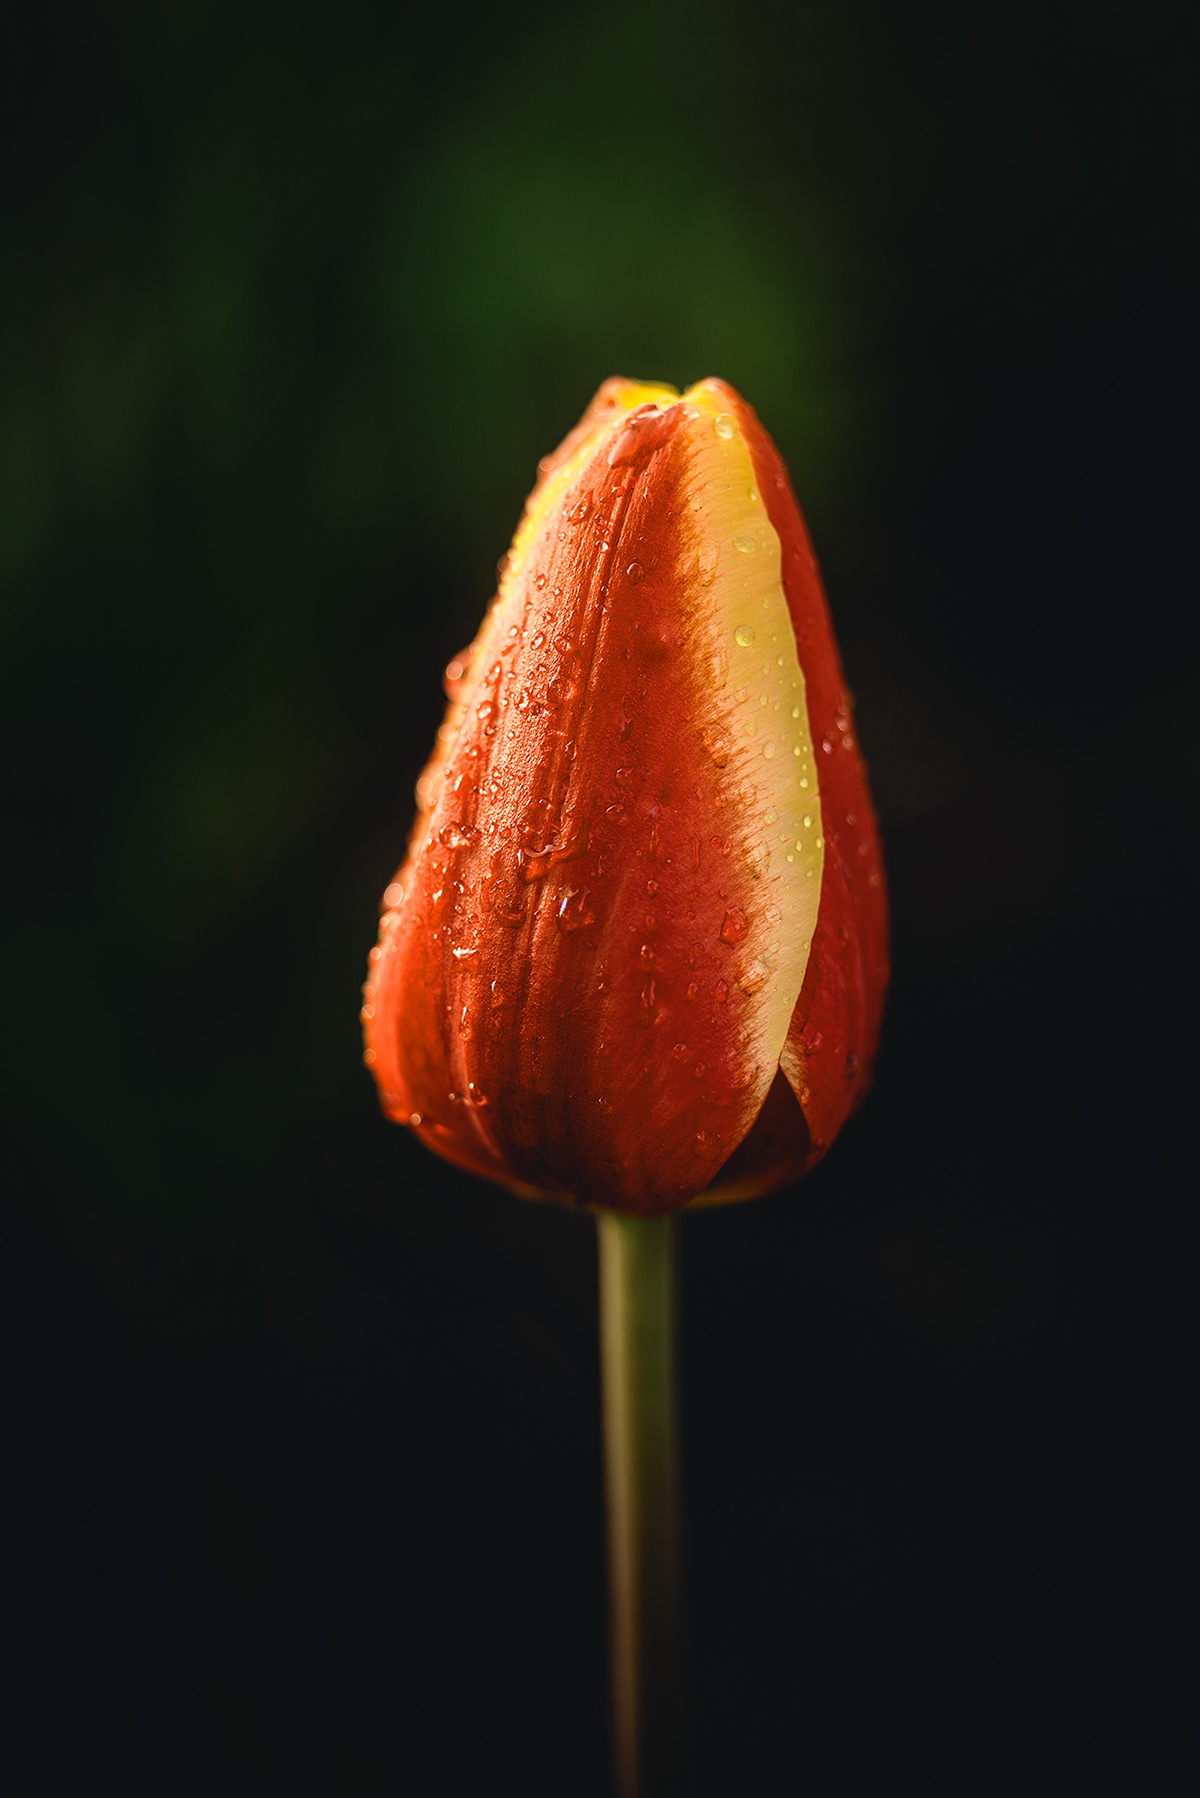 Flowers tulips colors ottawa d610 tamron2470 nikon55mm yellow red Nature